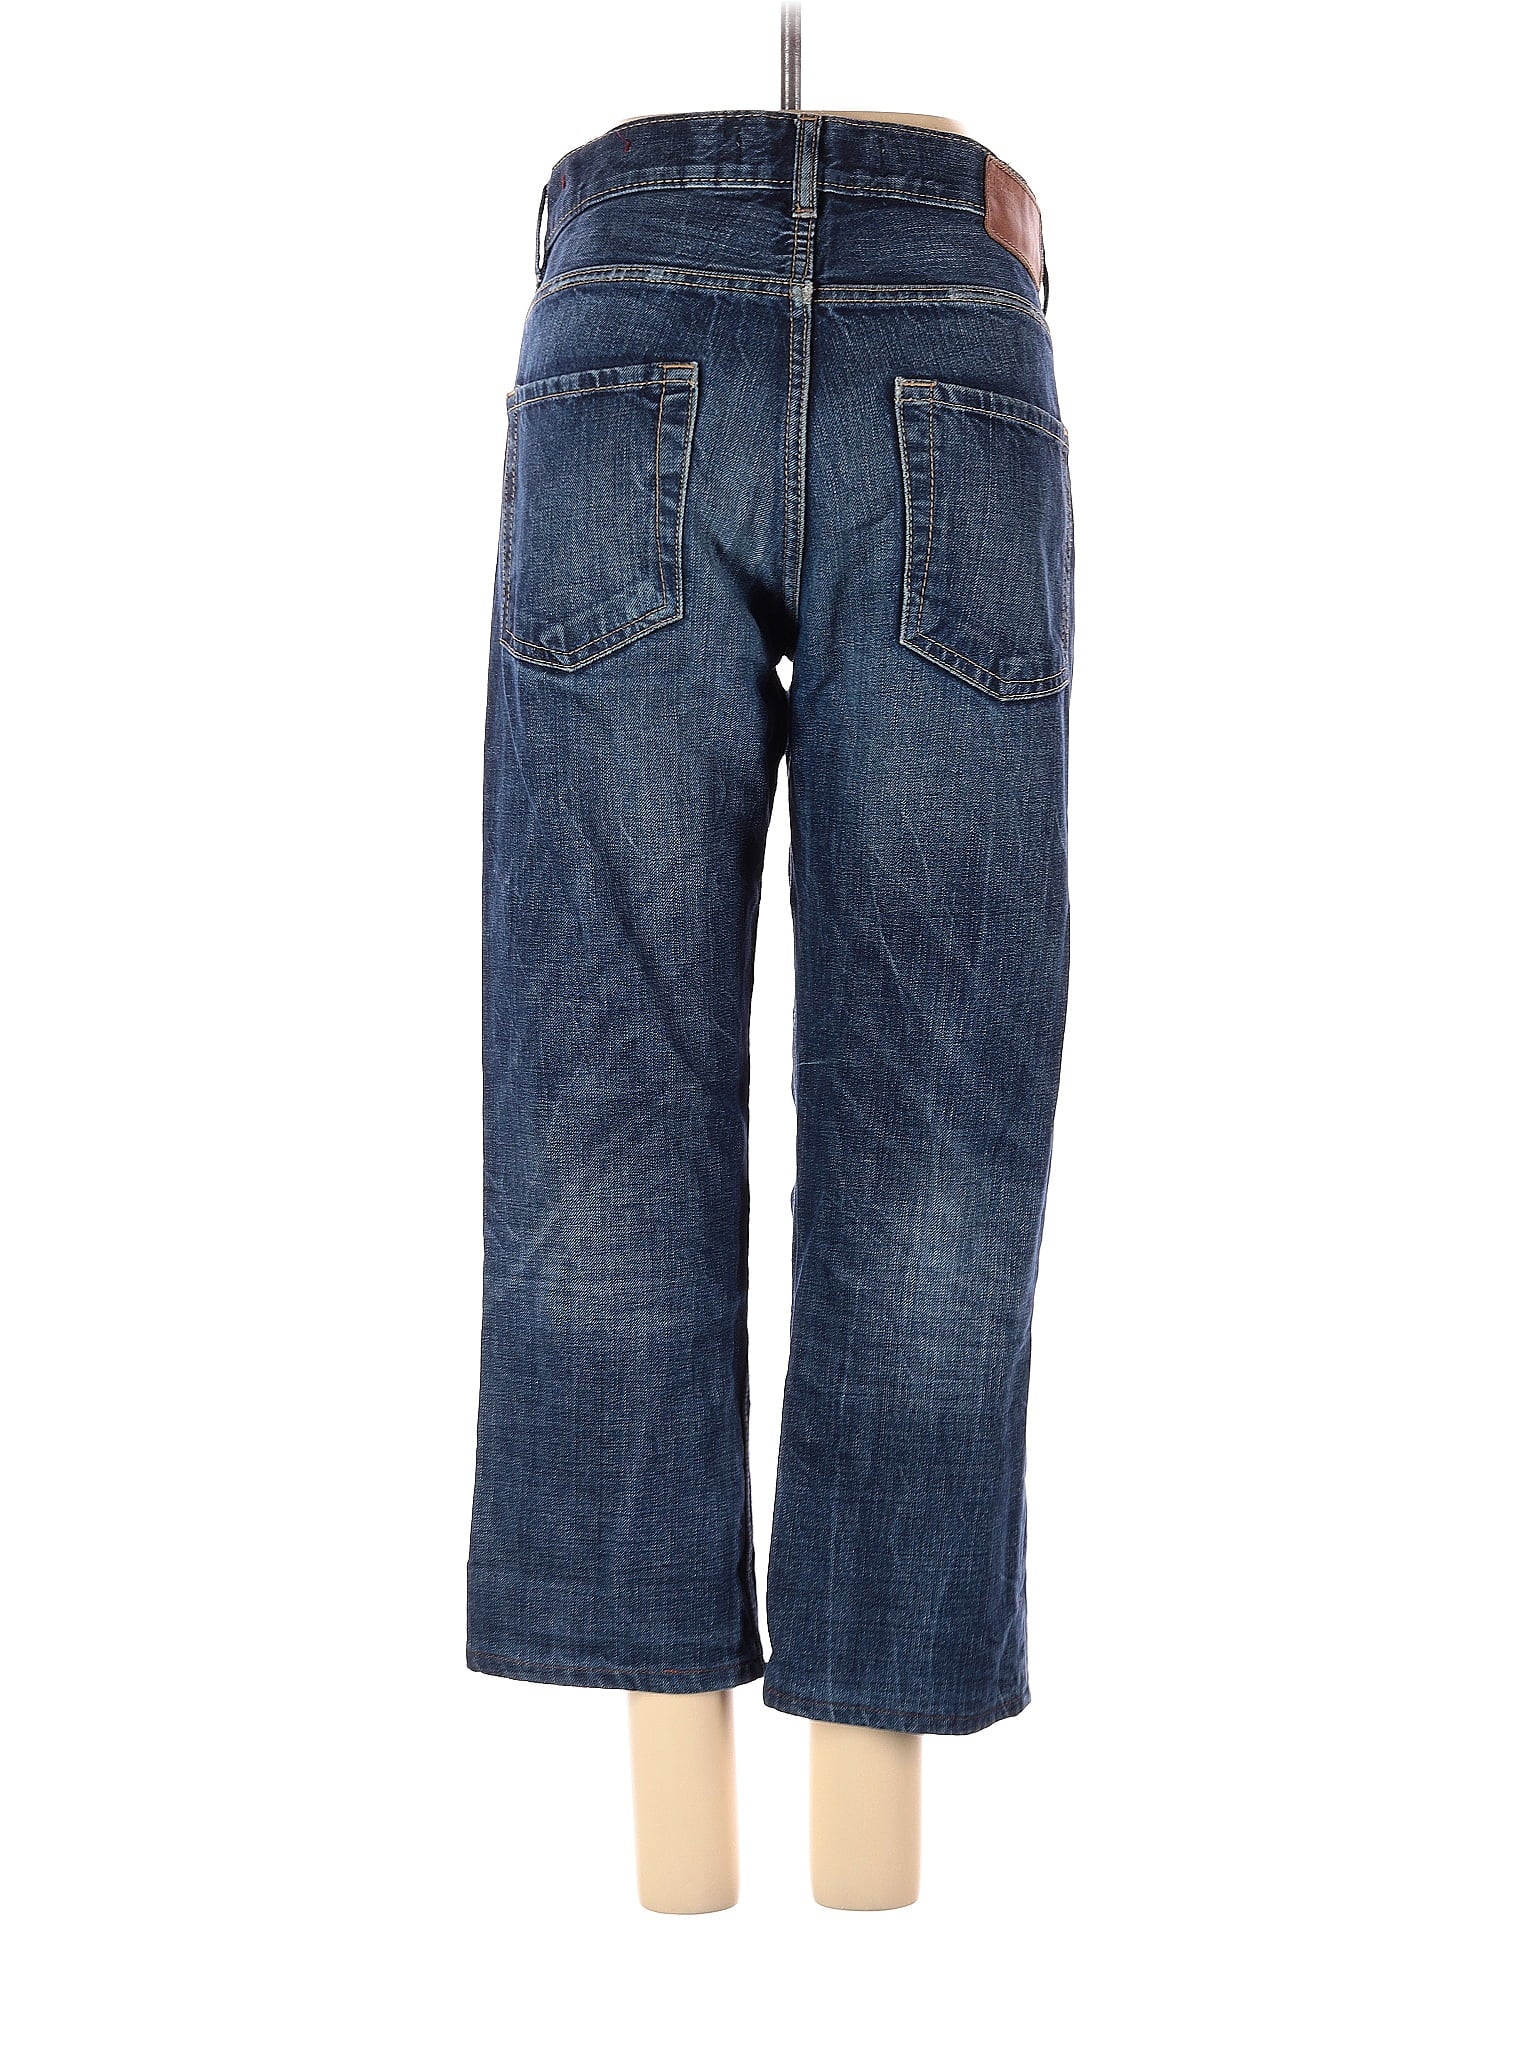 Jeans size - 32 (EU)